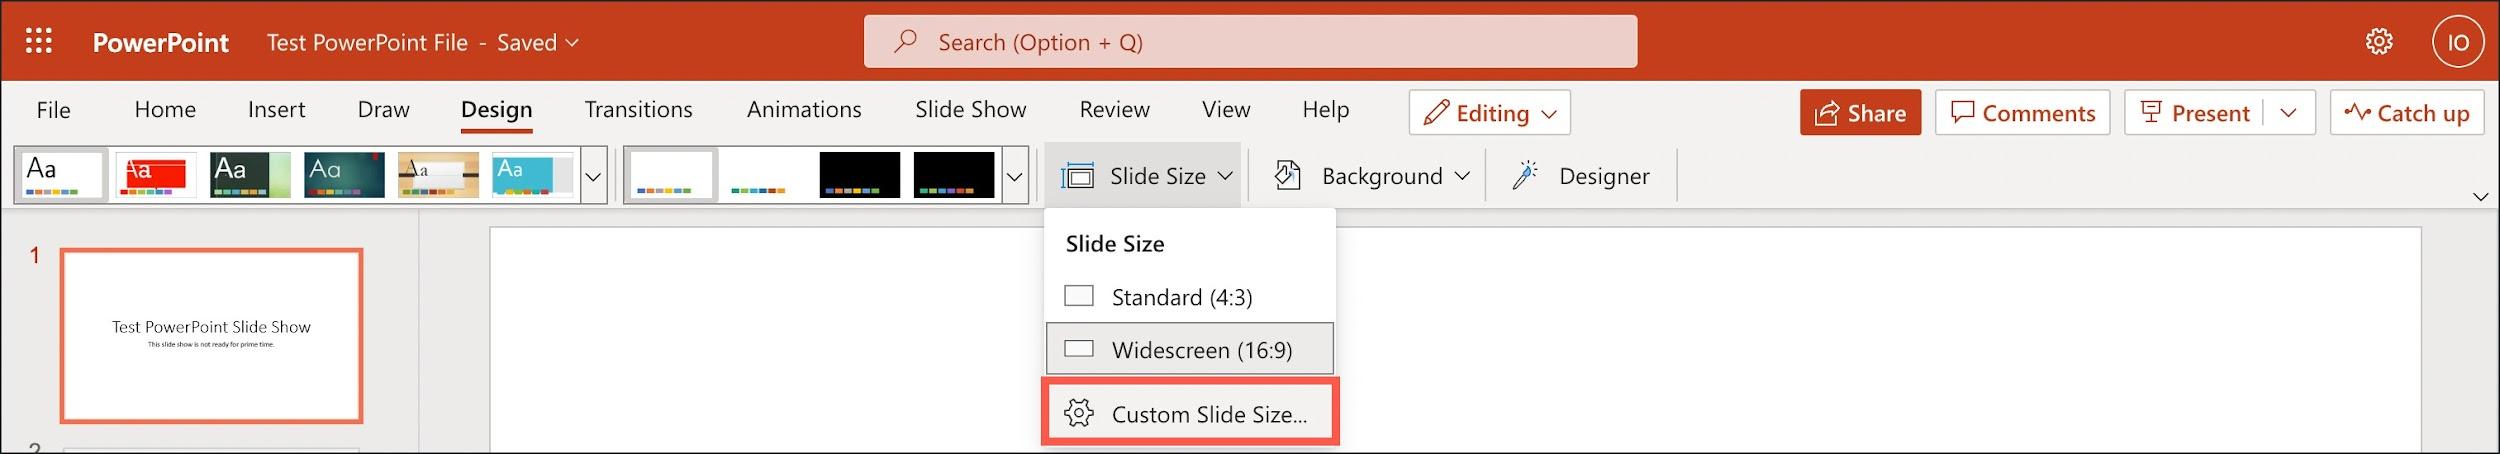 PowerPoint - Slide Size menu open, Custom Slide Size highlighted